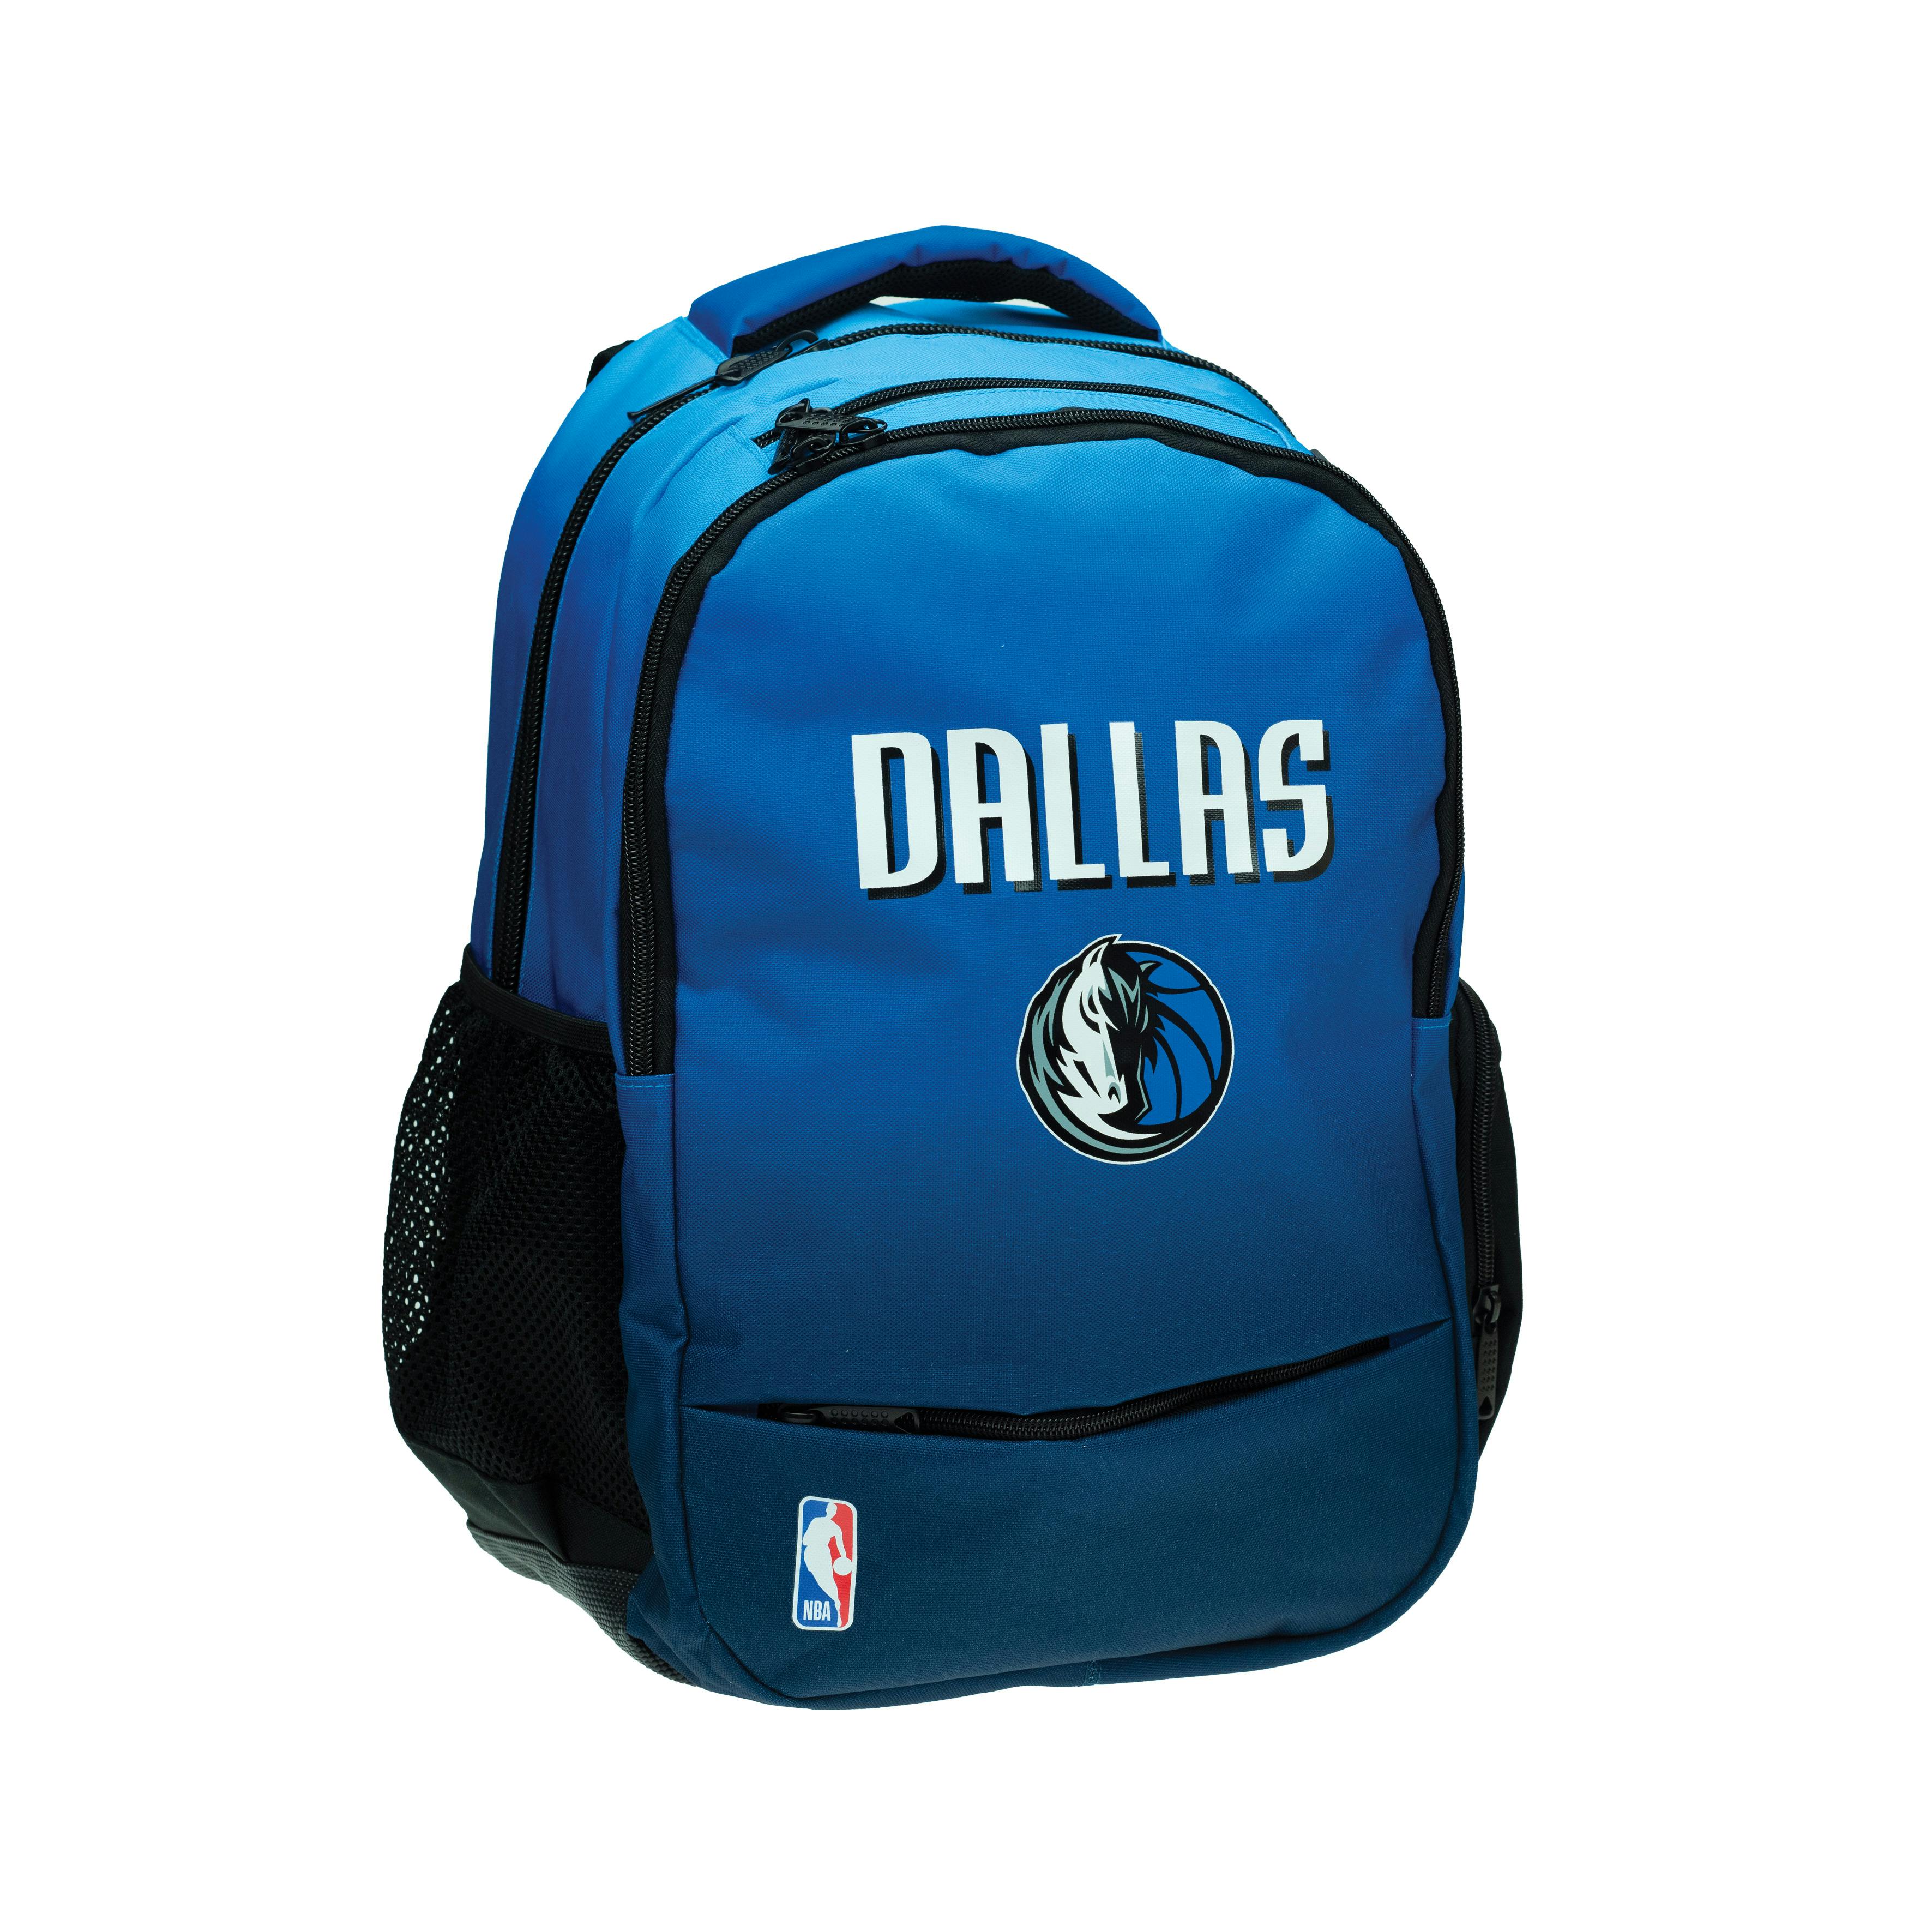 Back Me Up NBA DALLAS MAVERICKS RETRO Σχολική Τσάντα Πλάτης Backpack Δημοτικού Μπλε με 3 θήκες  338-90031 